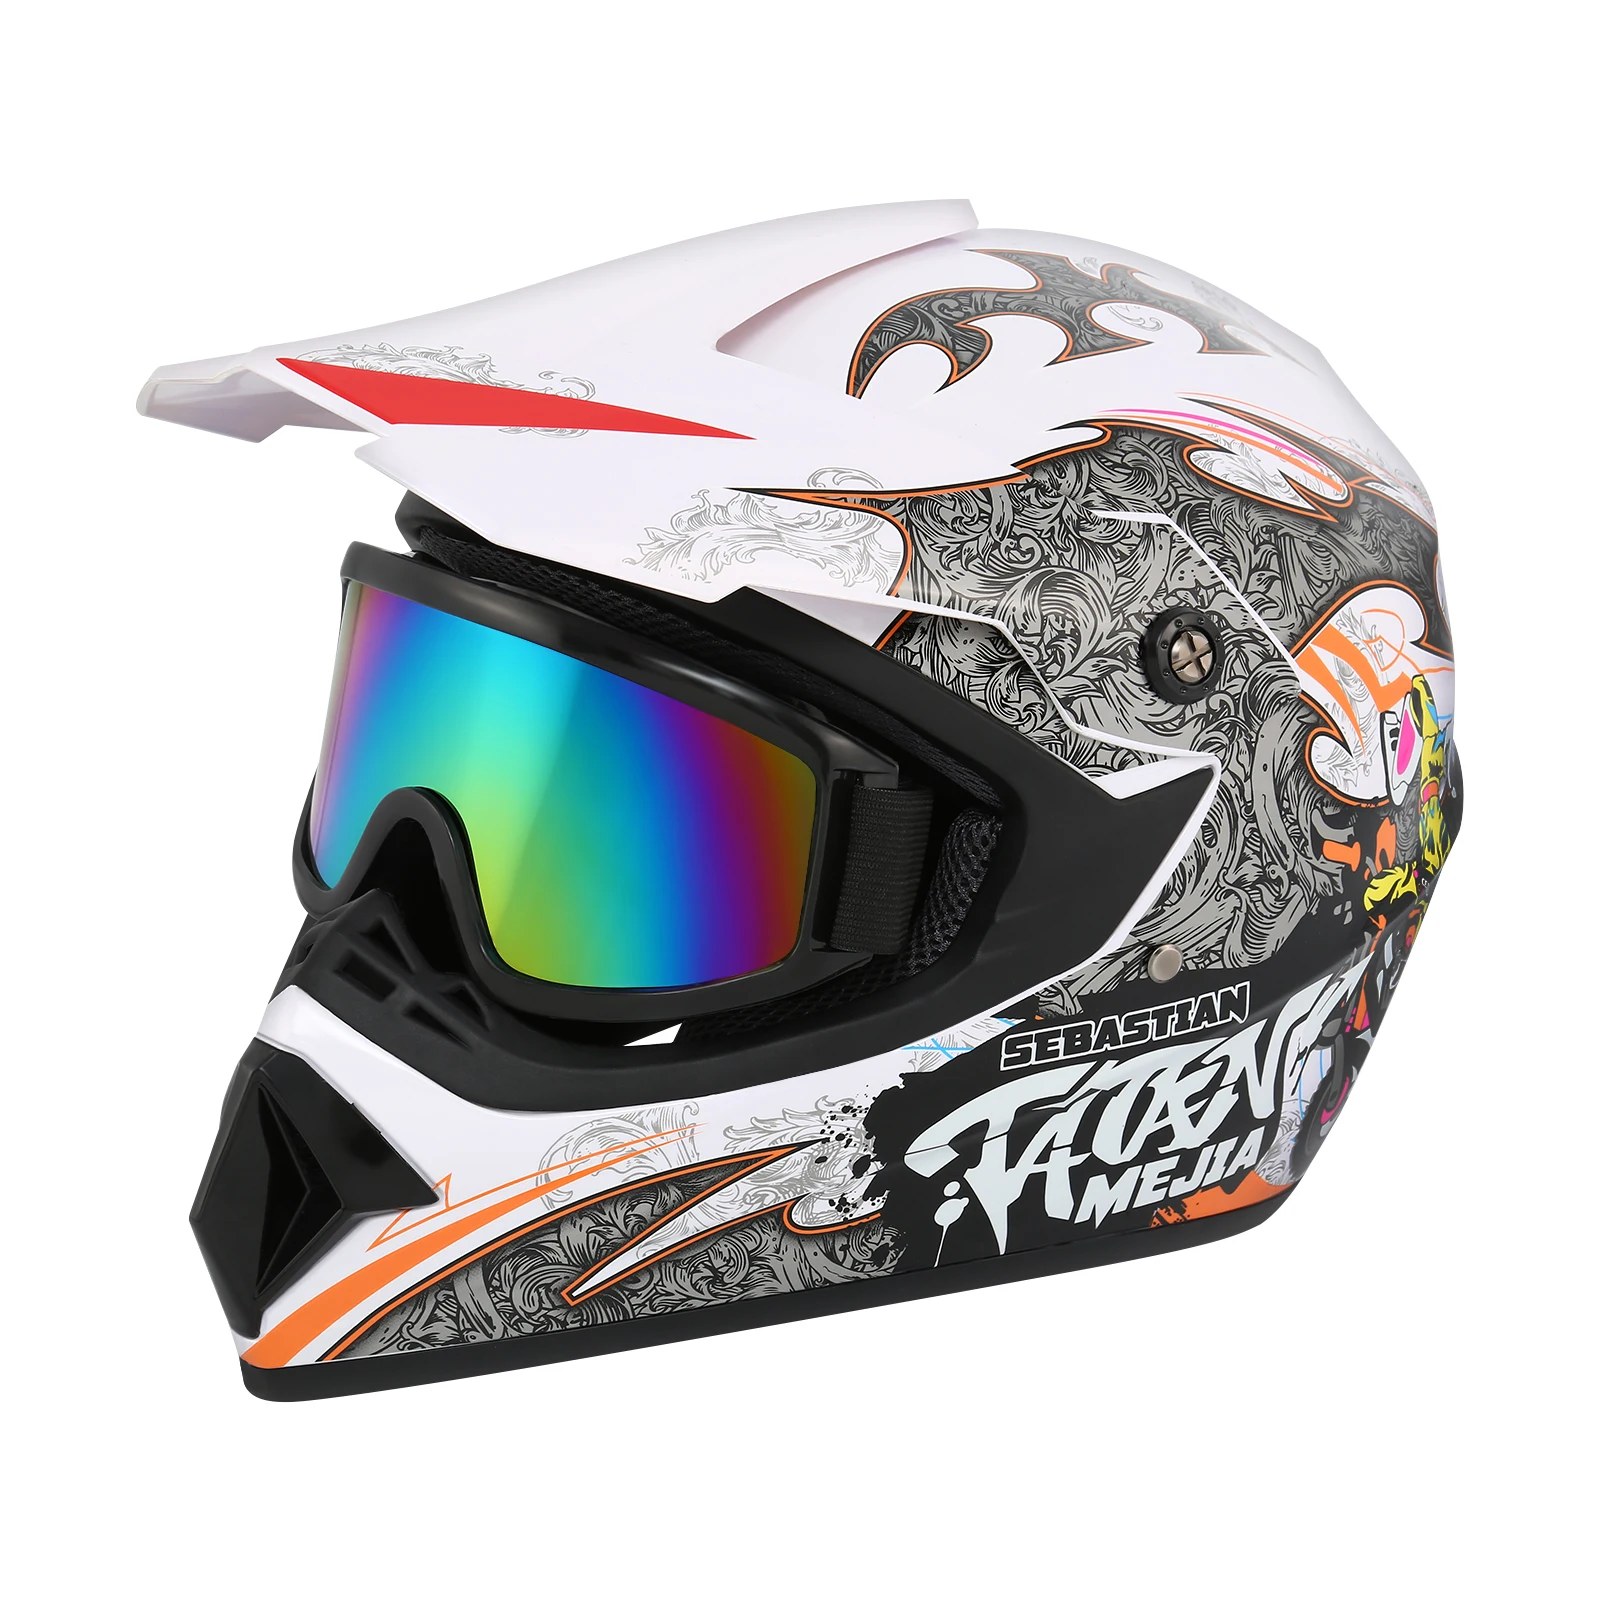 Unisex Four Seasons Adult Youth Helmet Motorcycle Full Face Offroad Dirt Bike